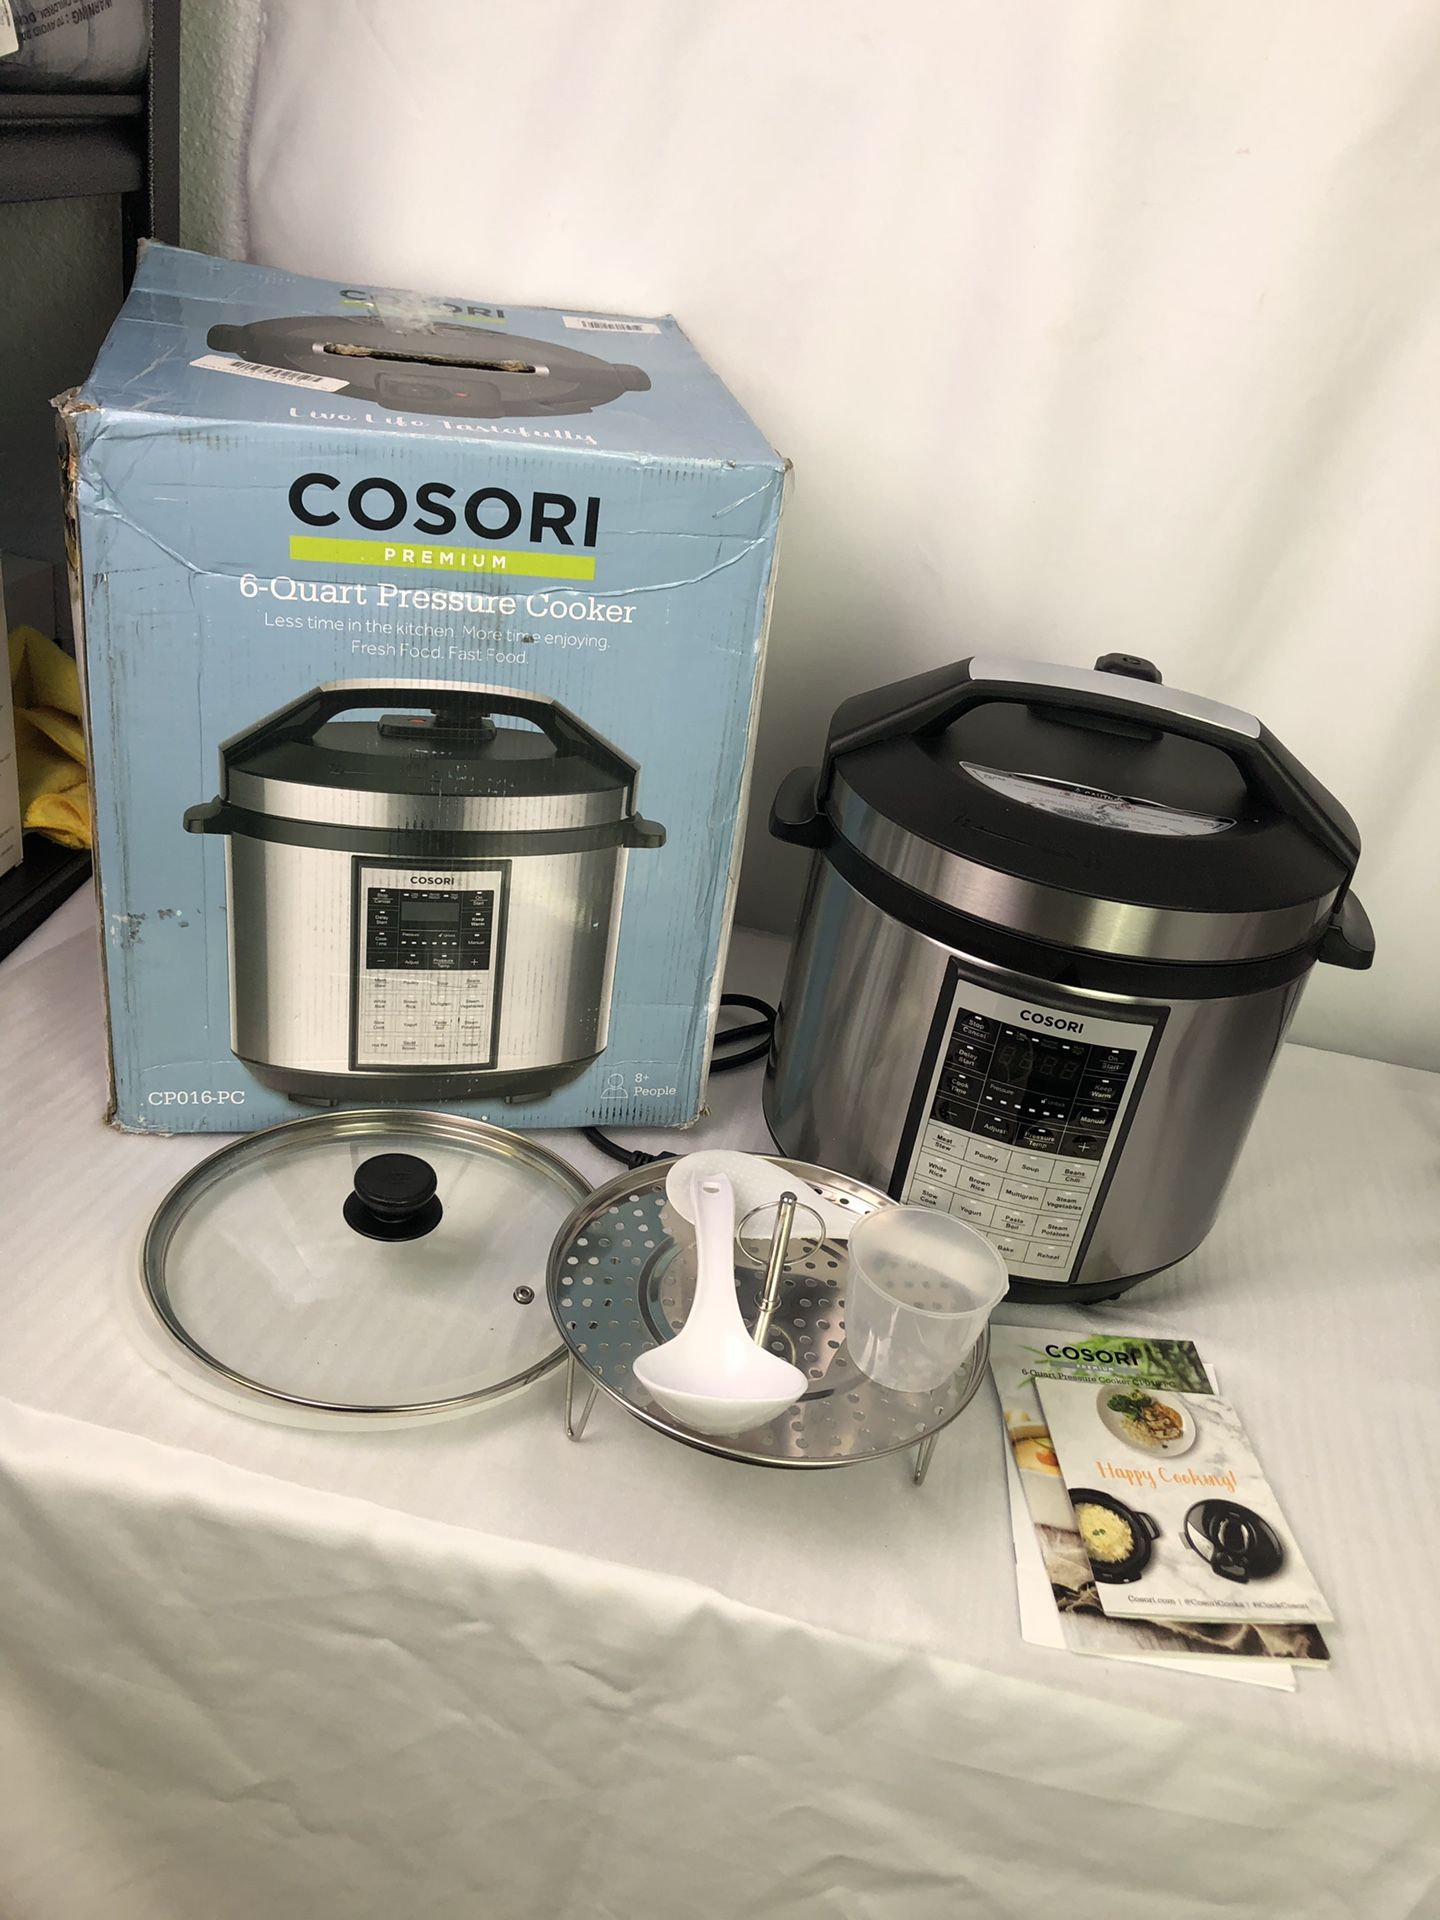 Cosori pressure cooker like new used